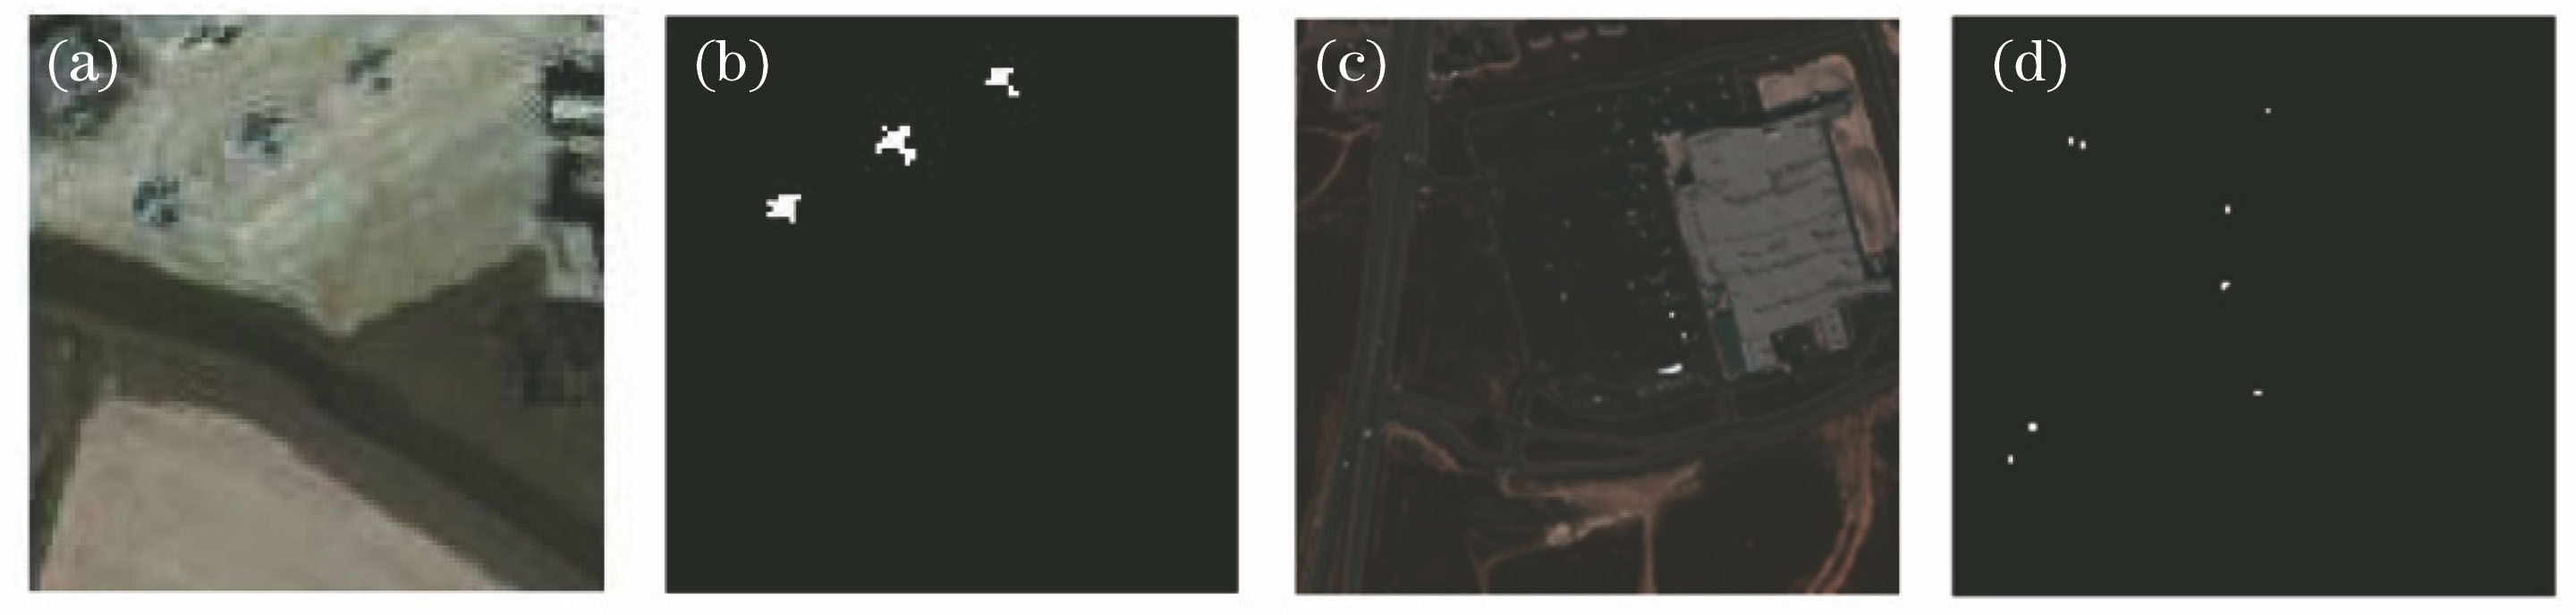 Real data. (a) Pseudo color image on AVIRIS airplane data; (b) ground truth on AVIRIS airplane data; (c) pseudo color image on HYDICE urban data; (d) ground truth on HYDICE urban data